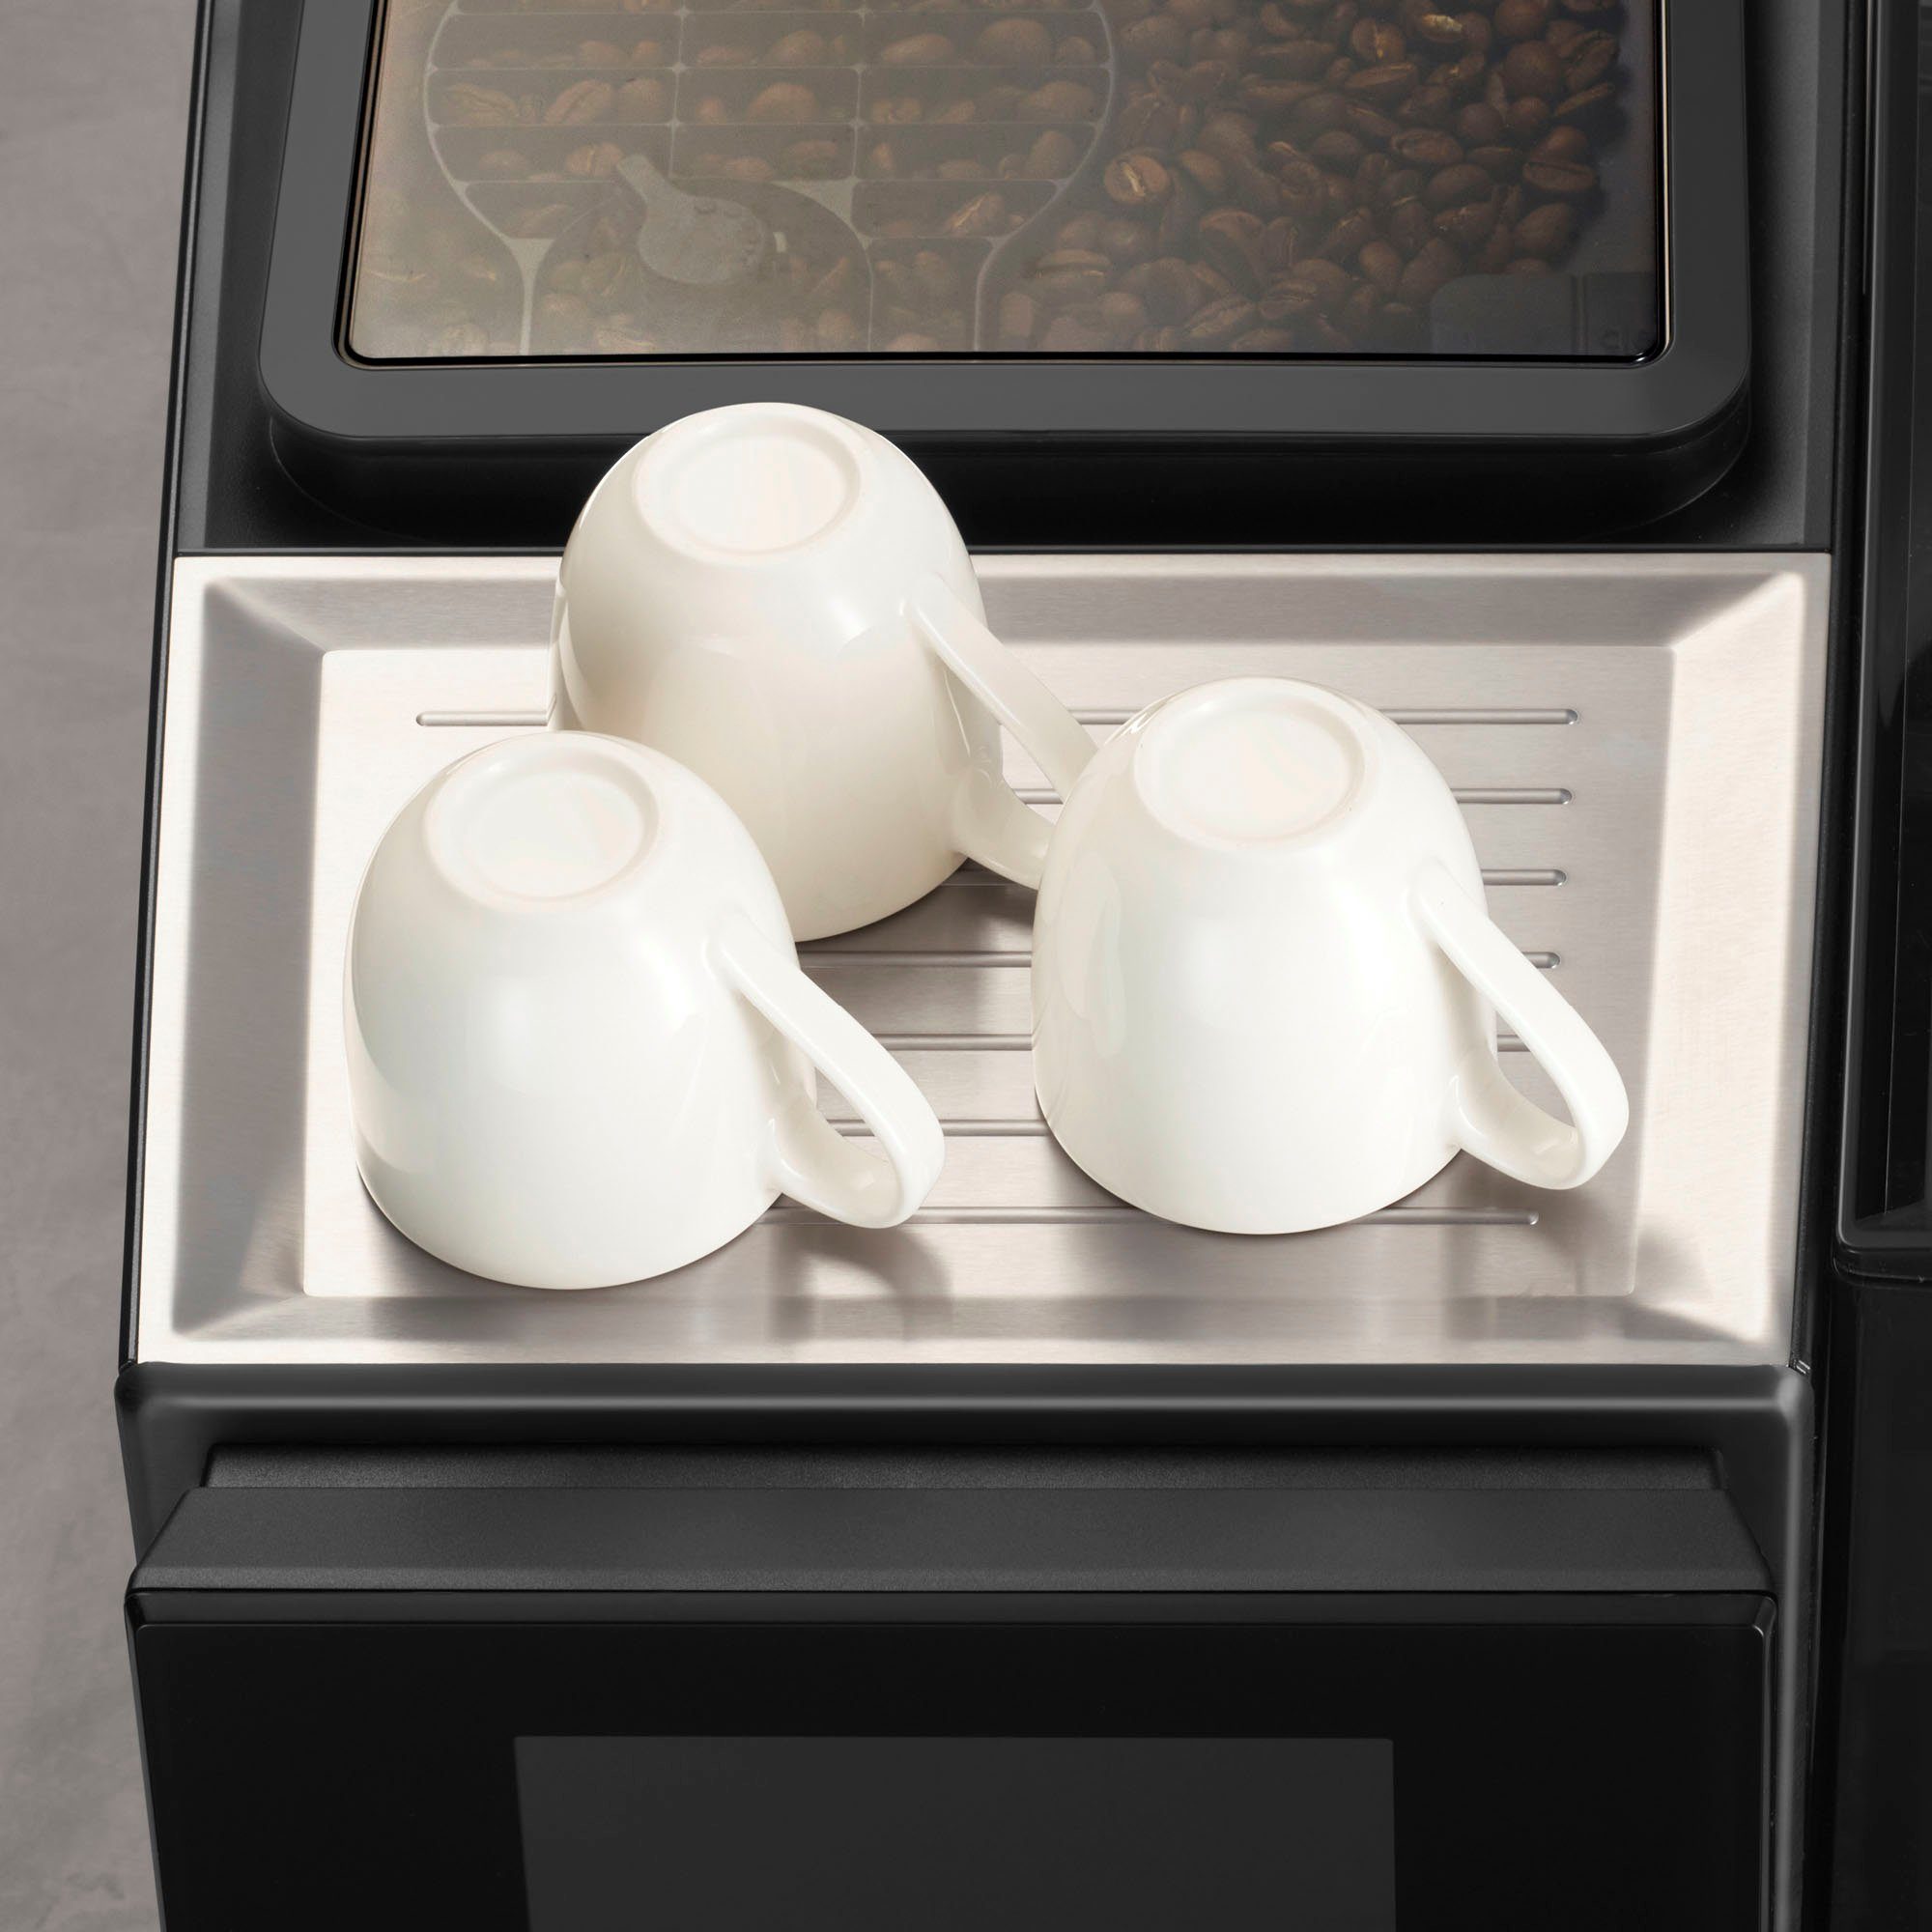 TP707D06, EQ700 Milchsystem-Reinigung bis Full-Touch-Display, 15 Profile speicherbar, classic SIEMENS Kaffeevollautomat